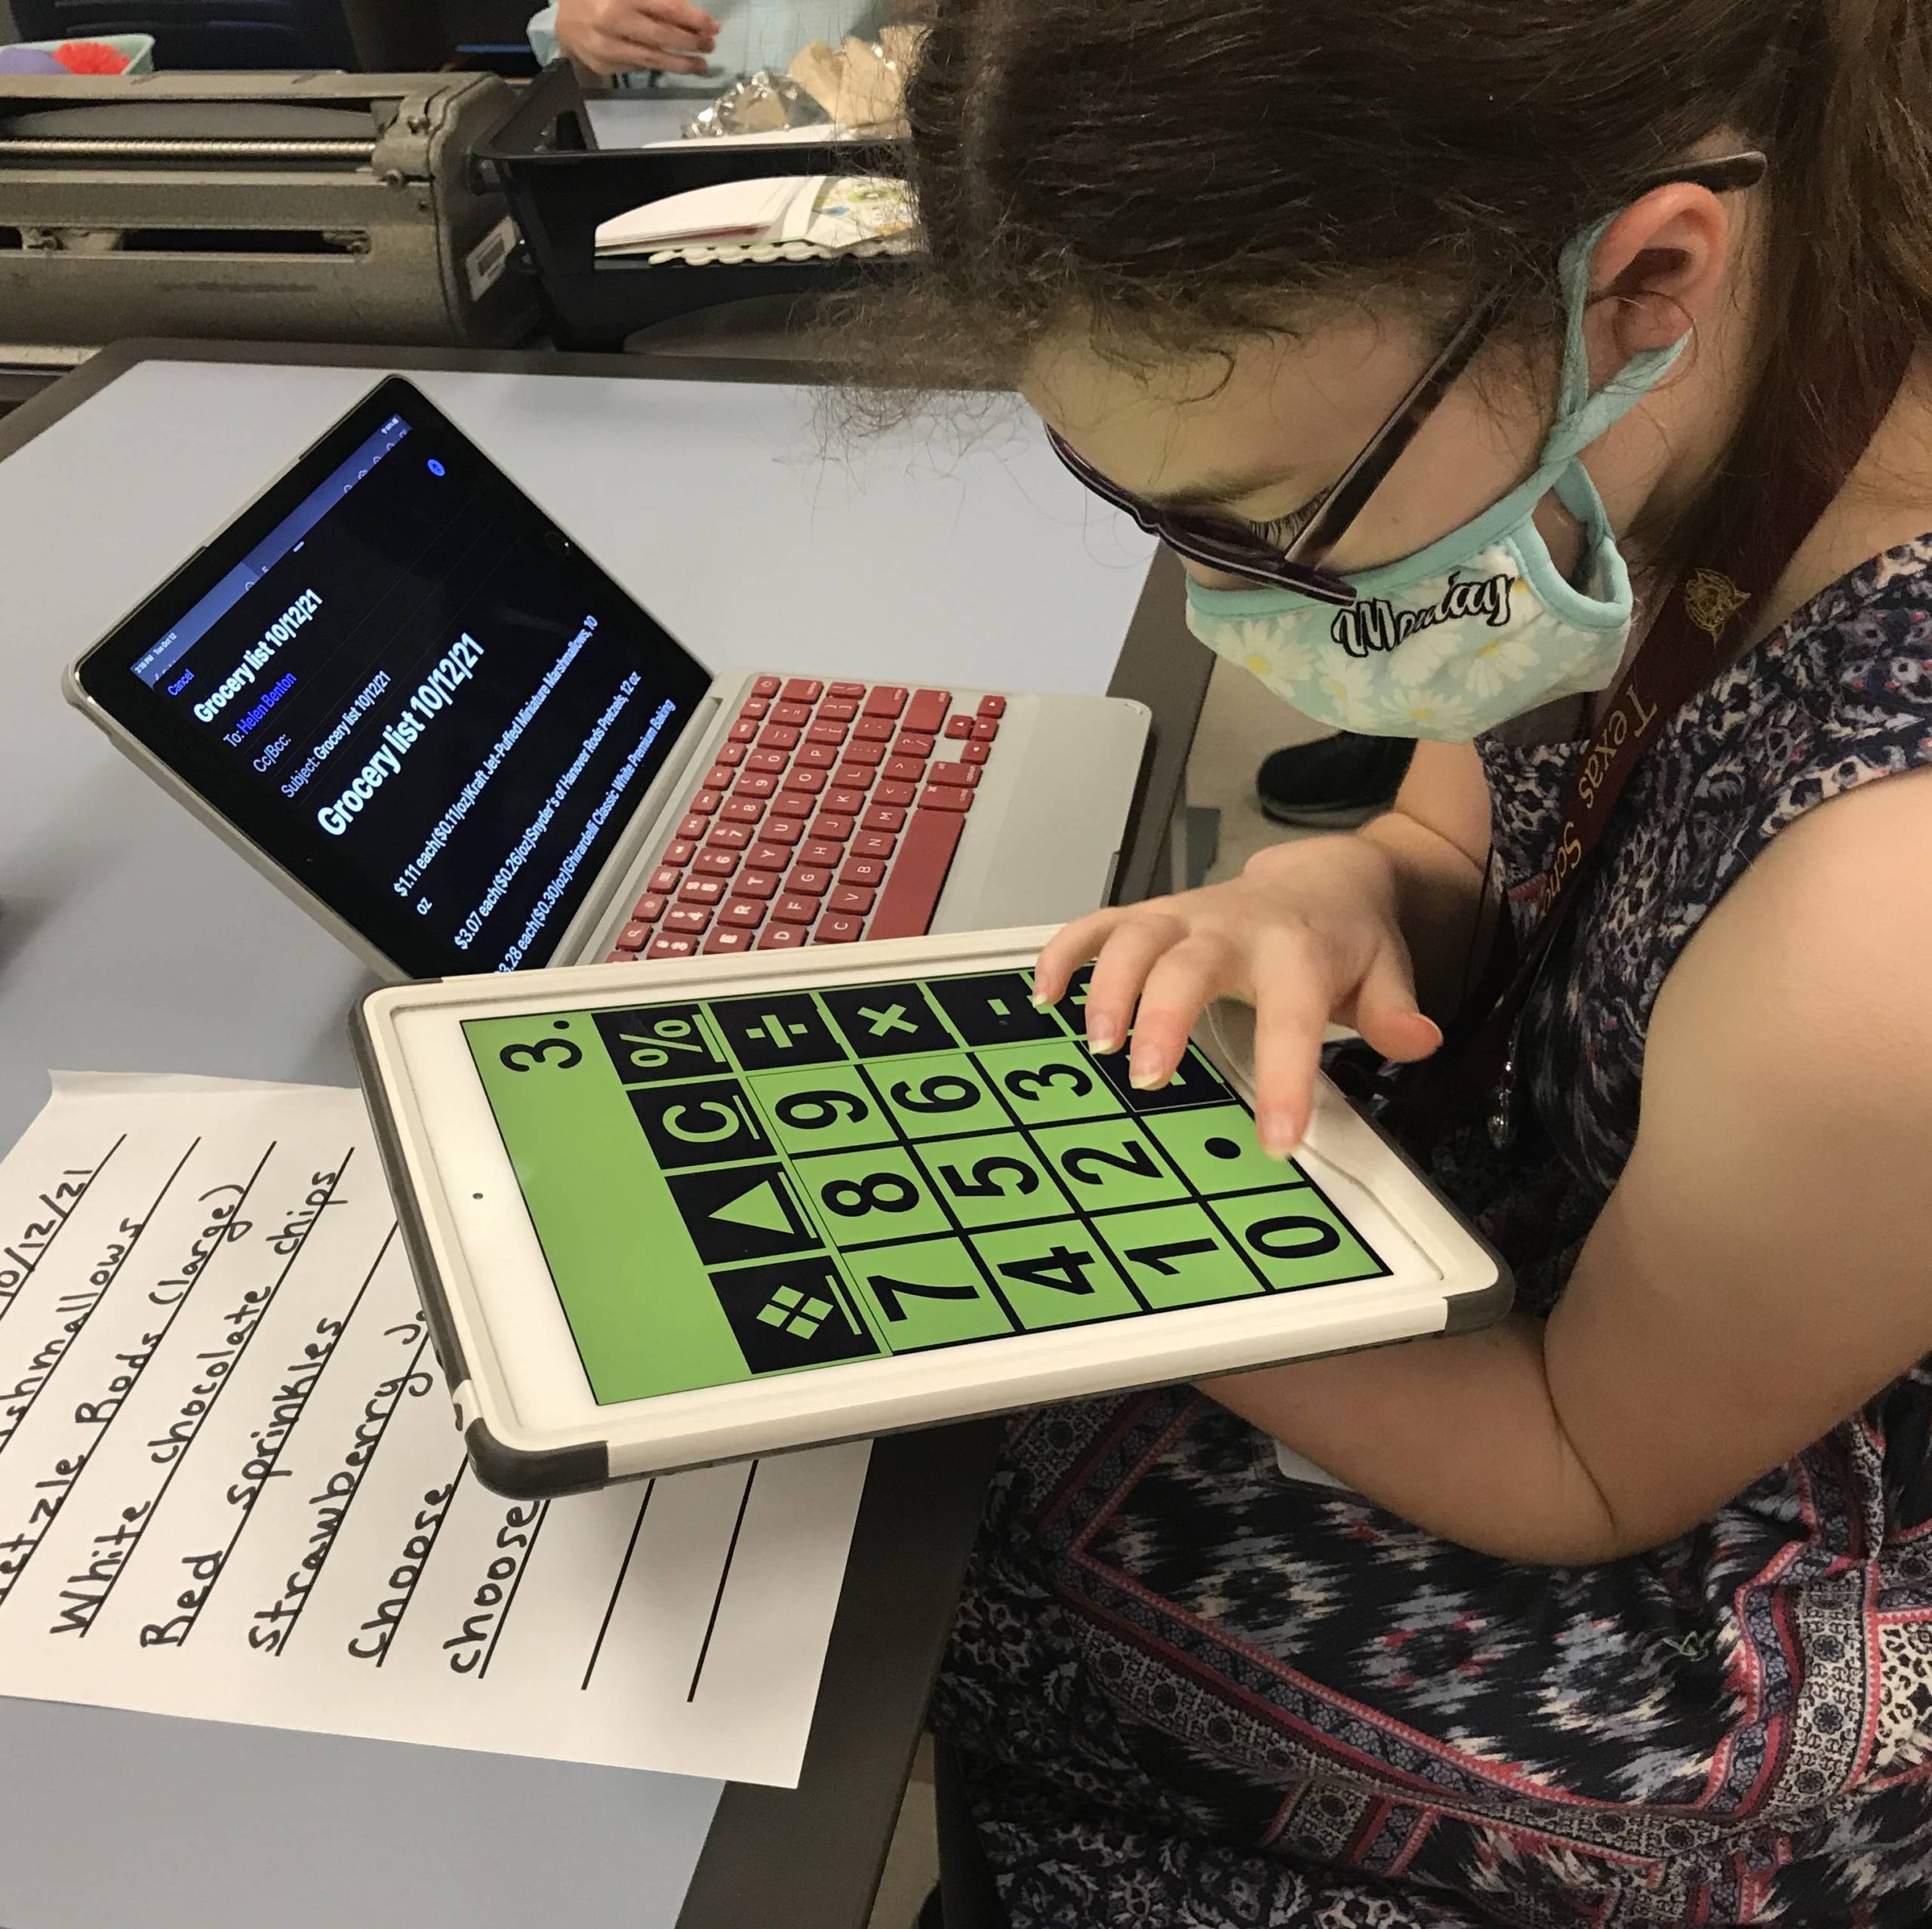 A girl uses a calculator on a tablet.